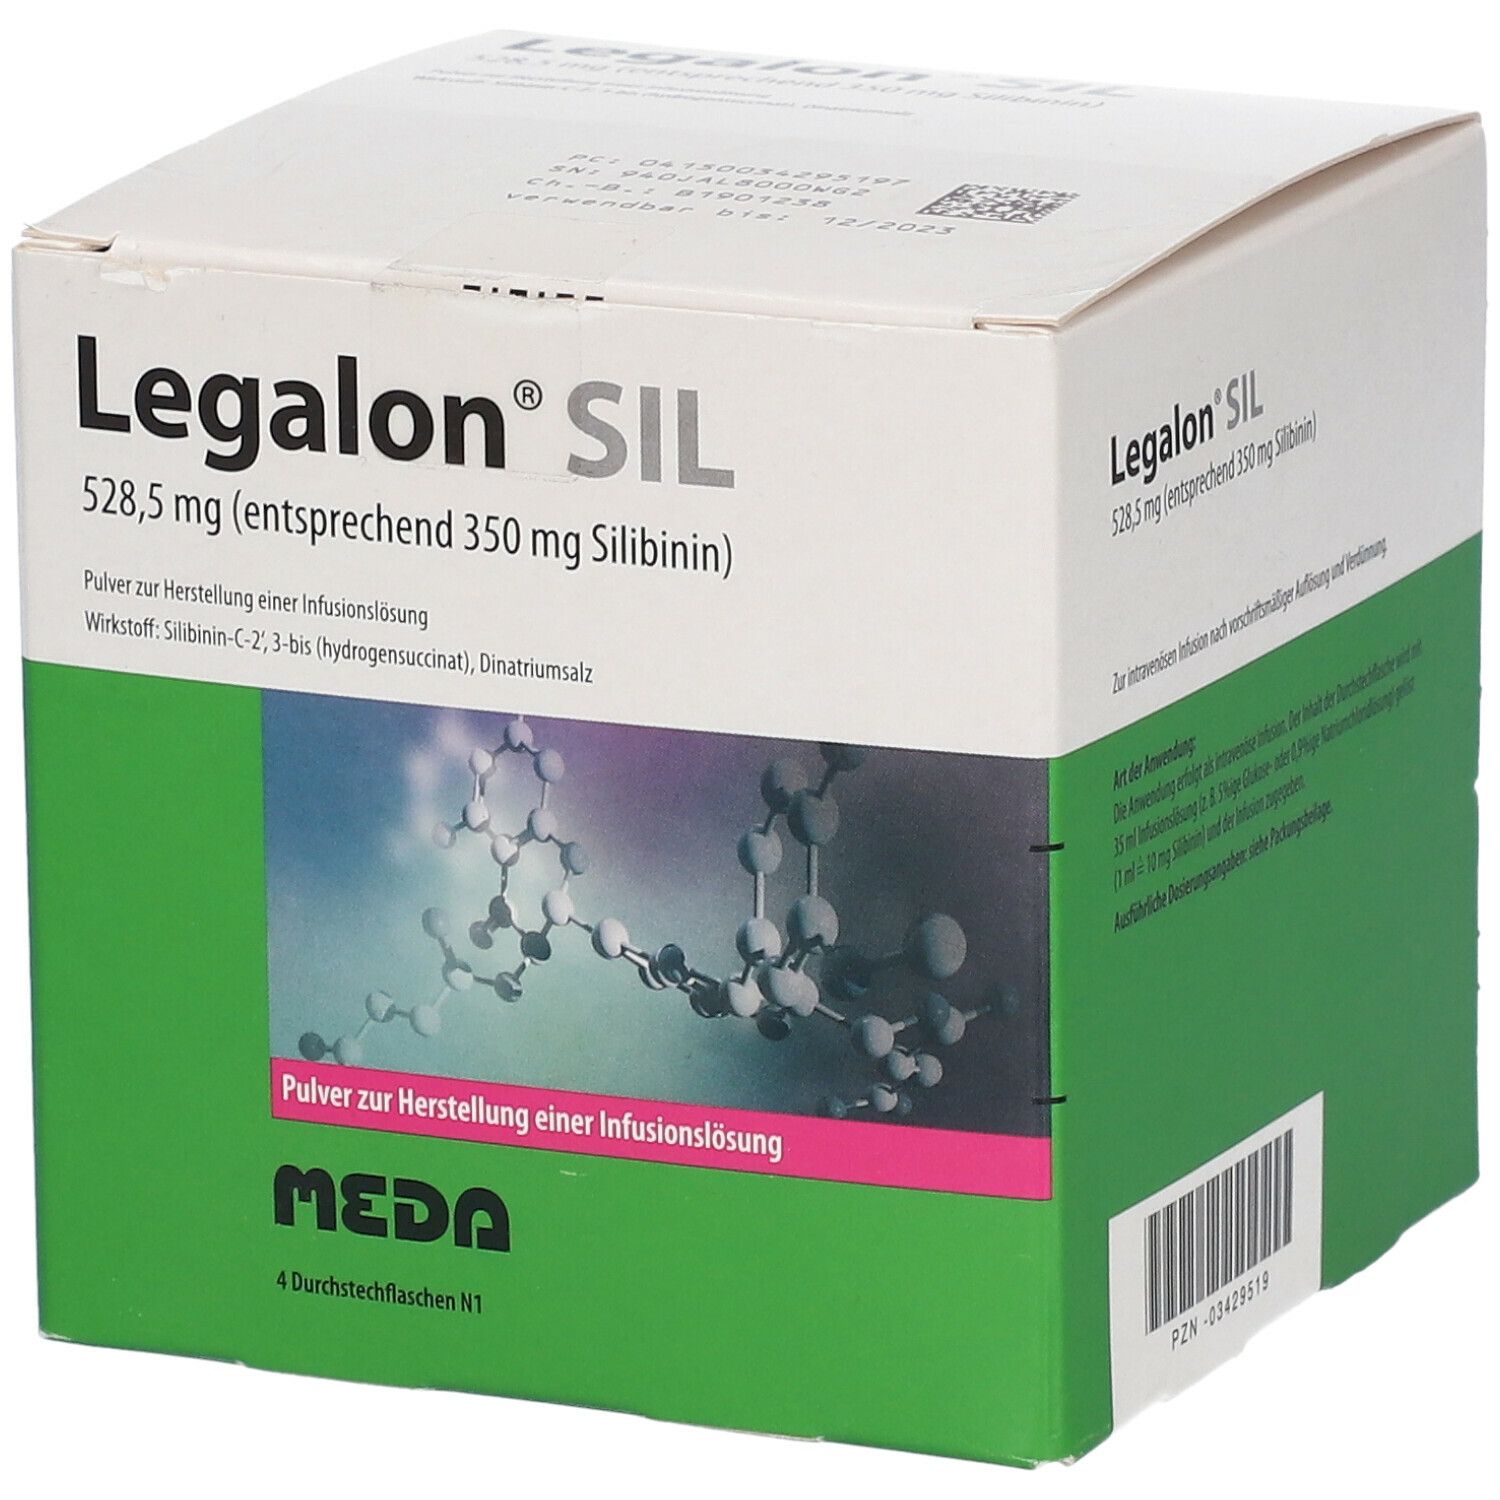 Legalon® SIL 528,5 mg